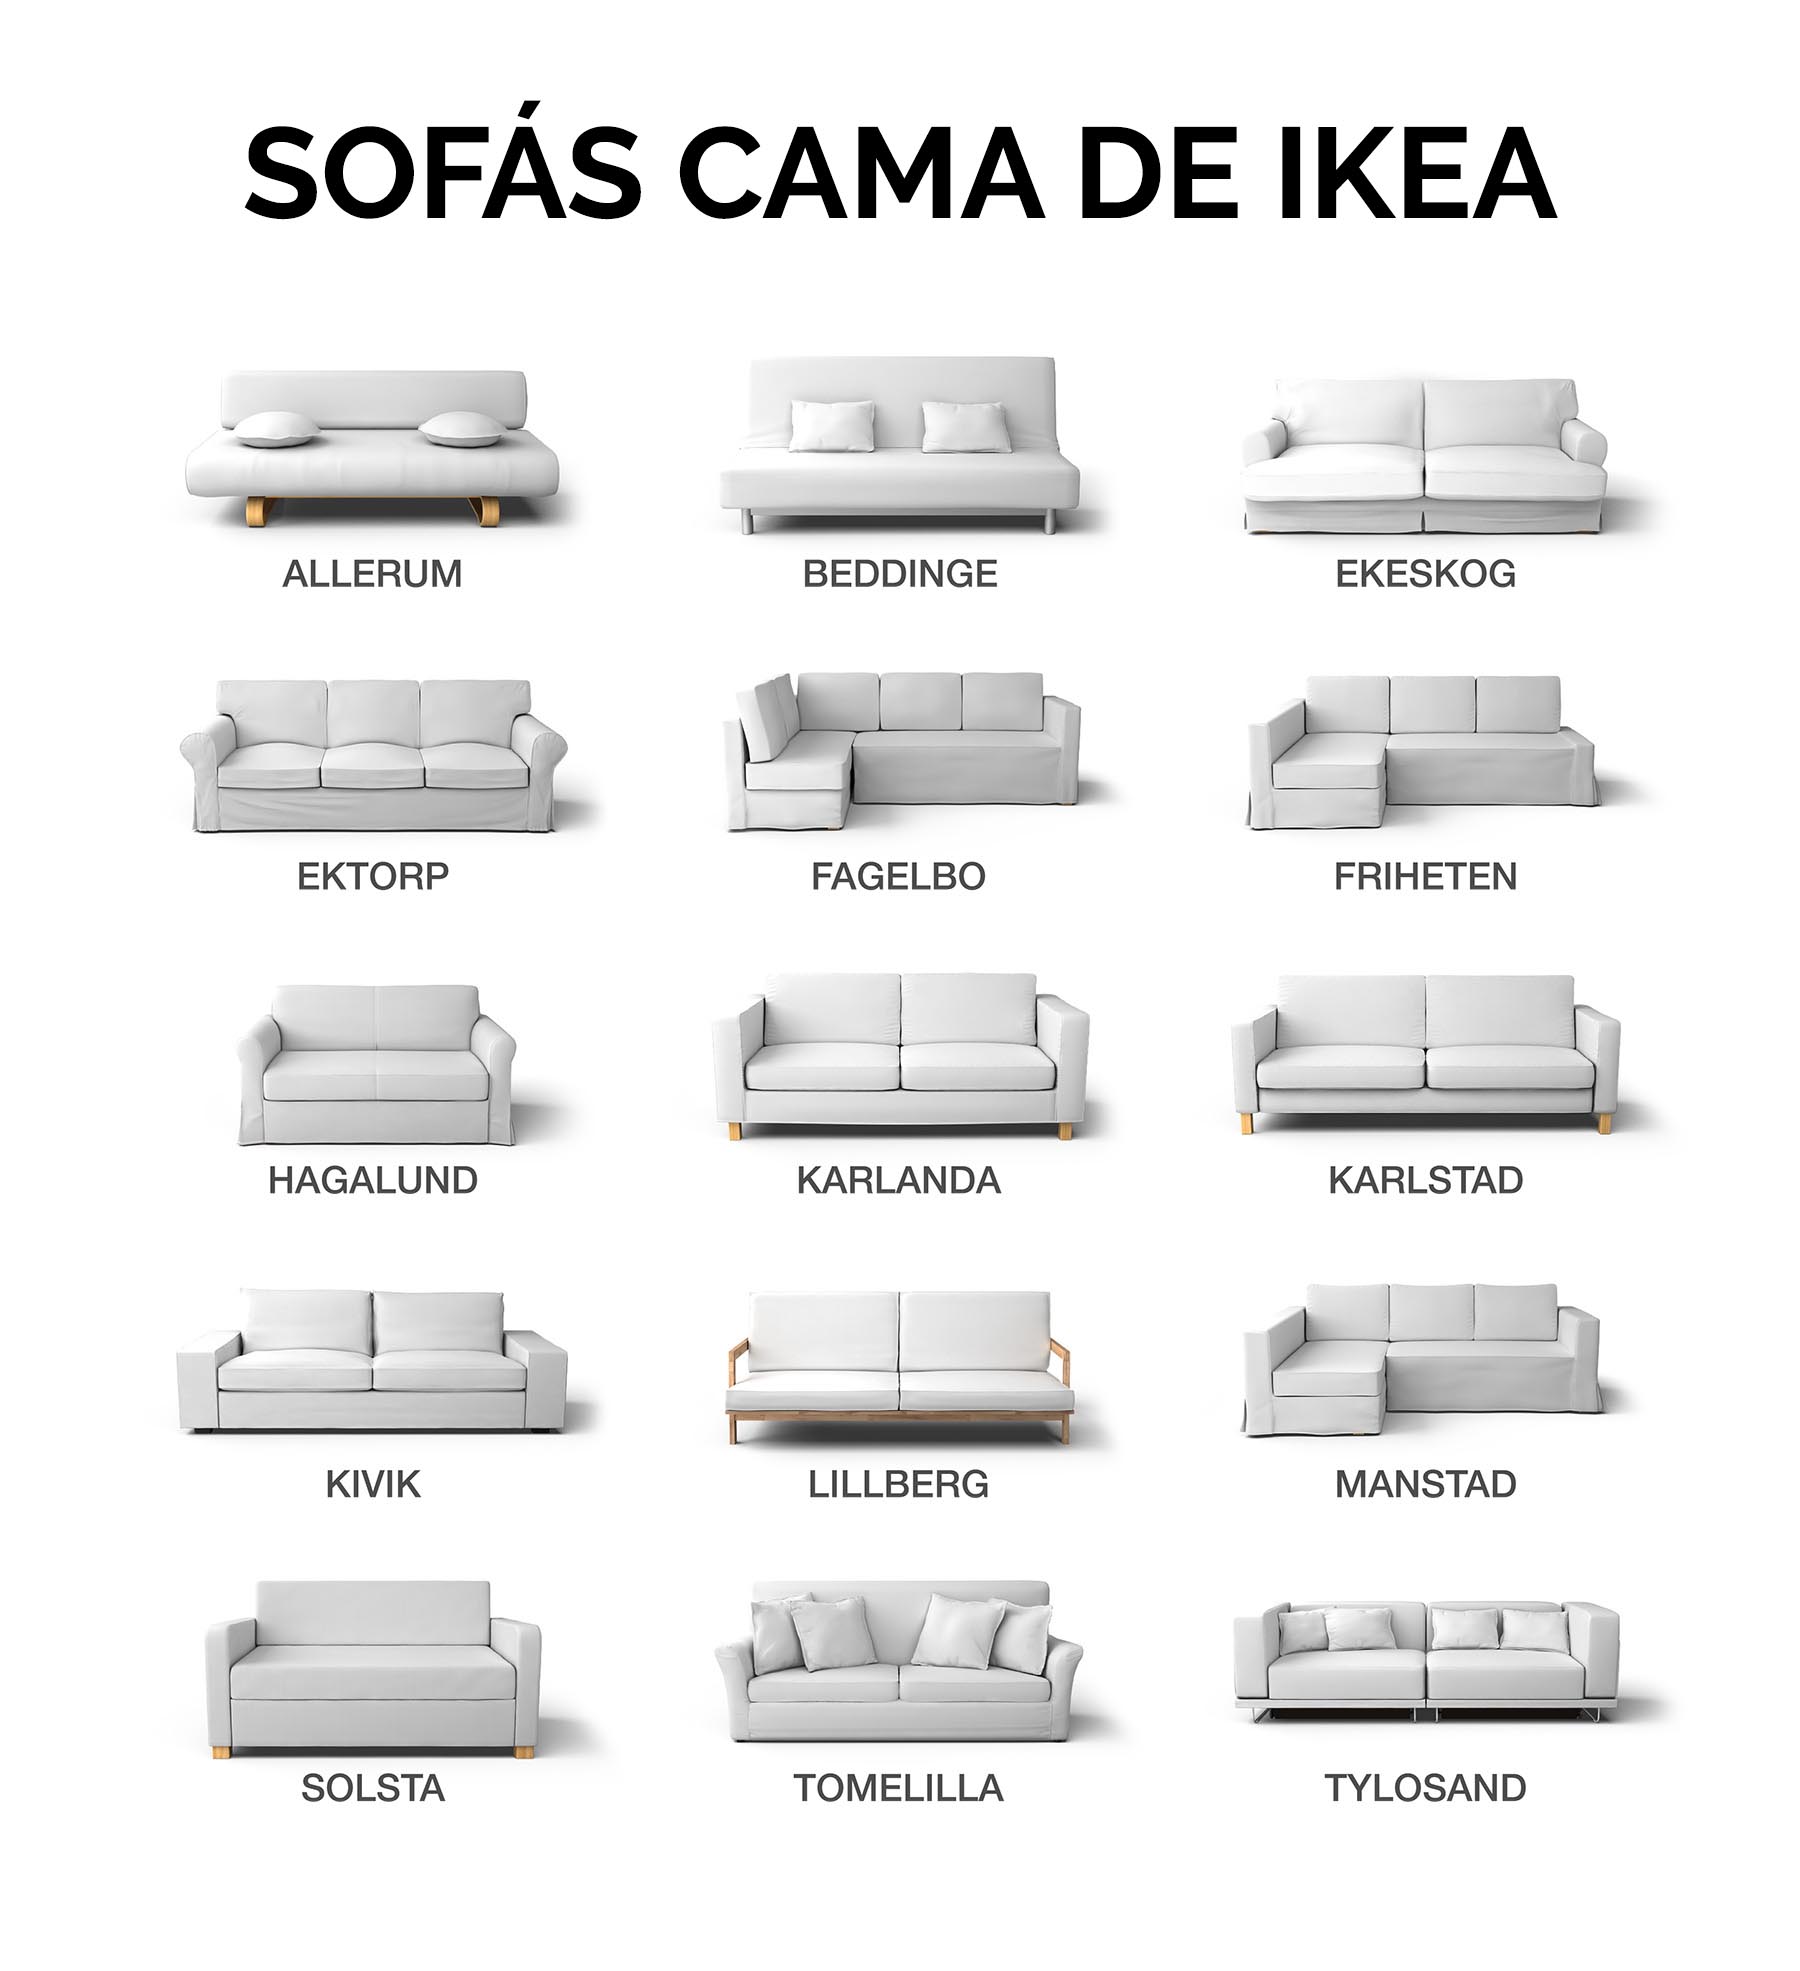 Qué modelo de sofá cama IKEA tengo? - Identifica tu sofá cama IKEA | Blog Works Inspiración decoración